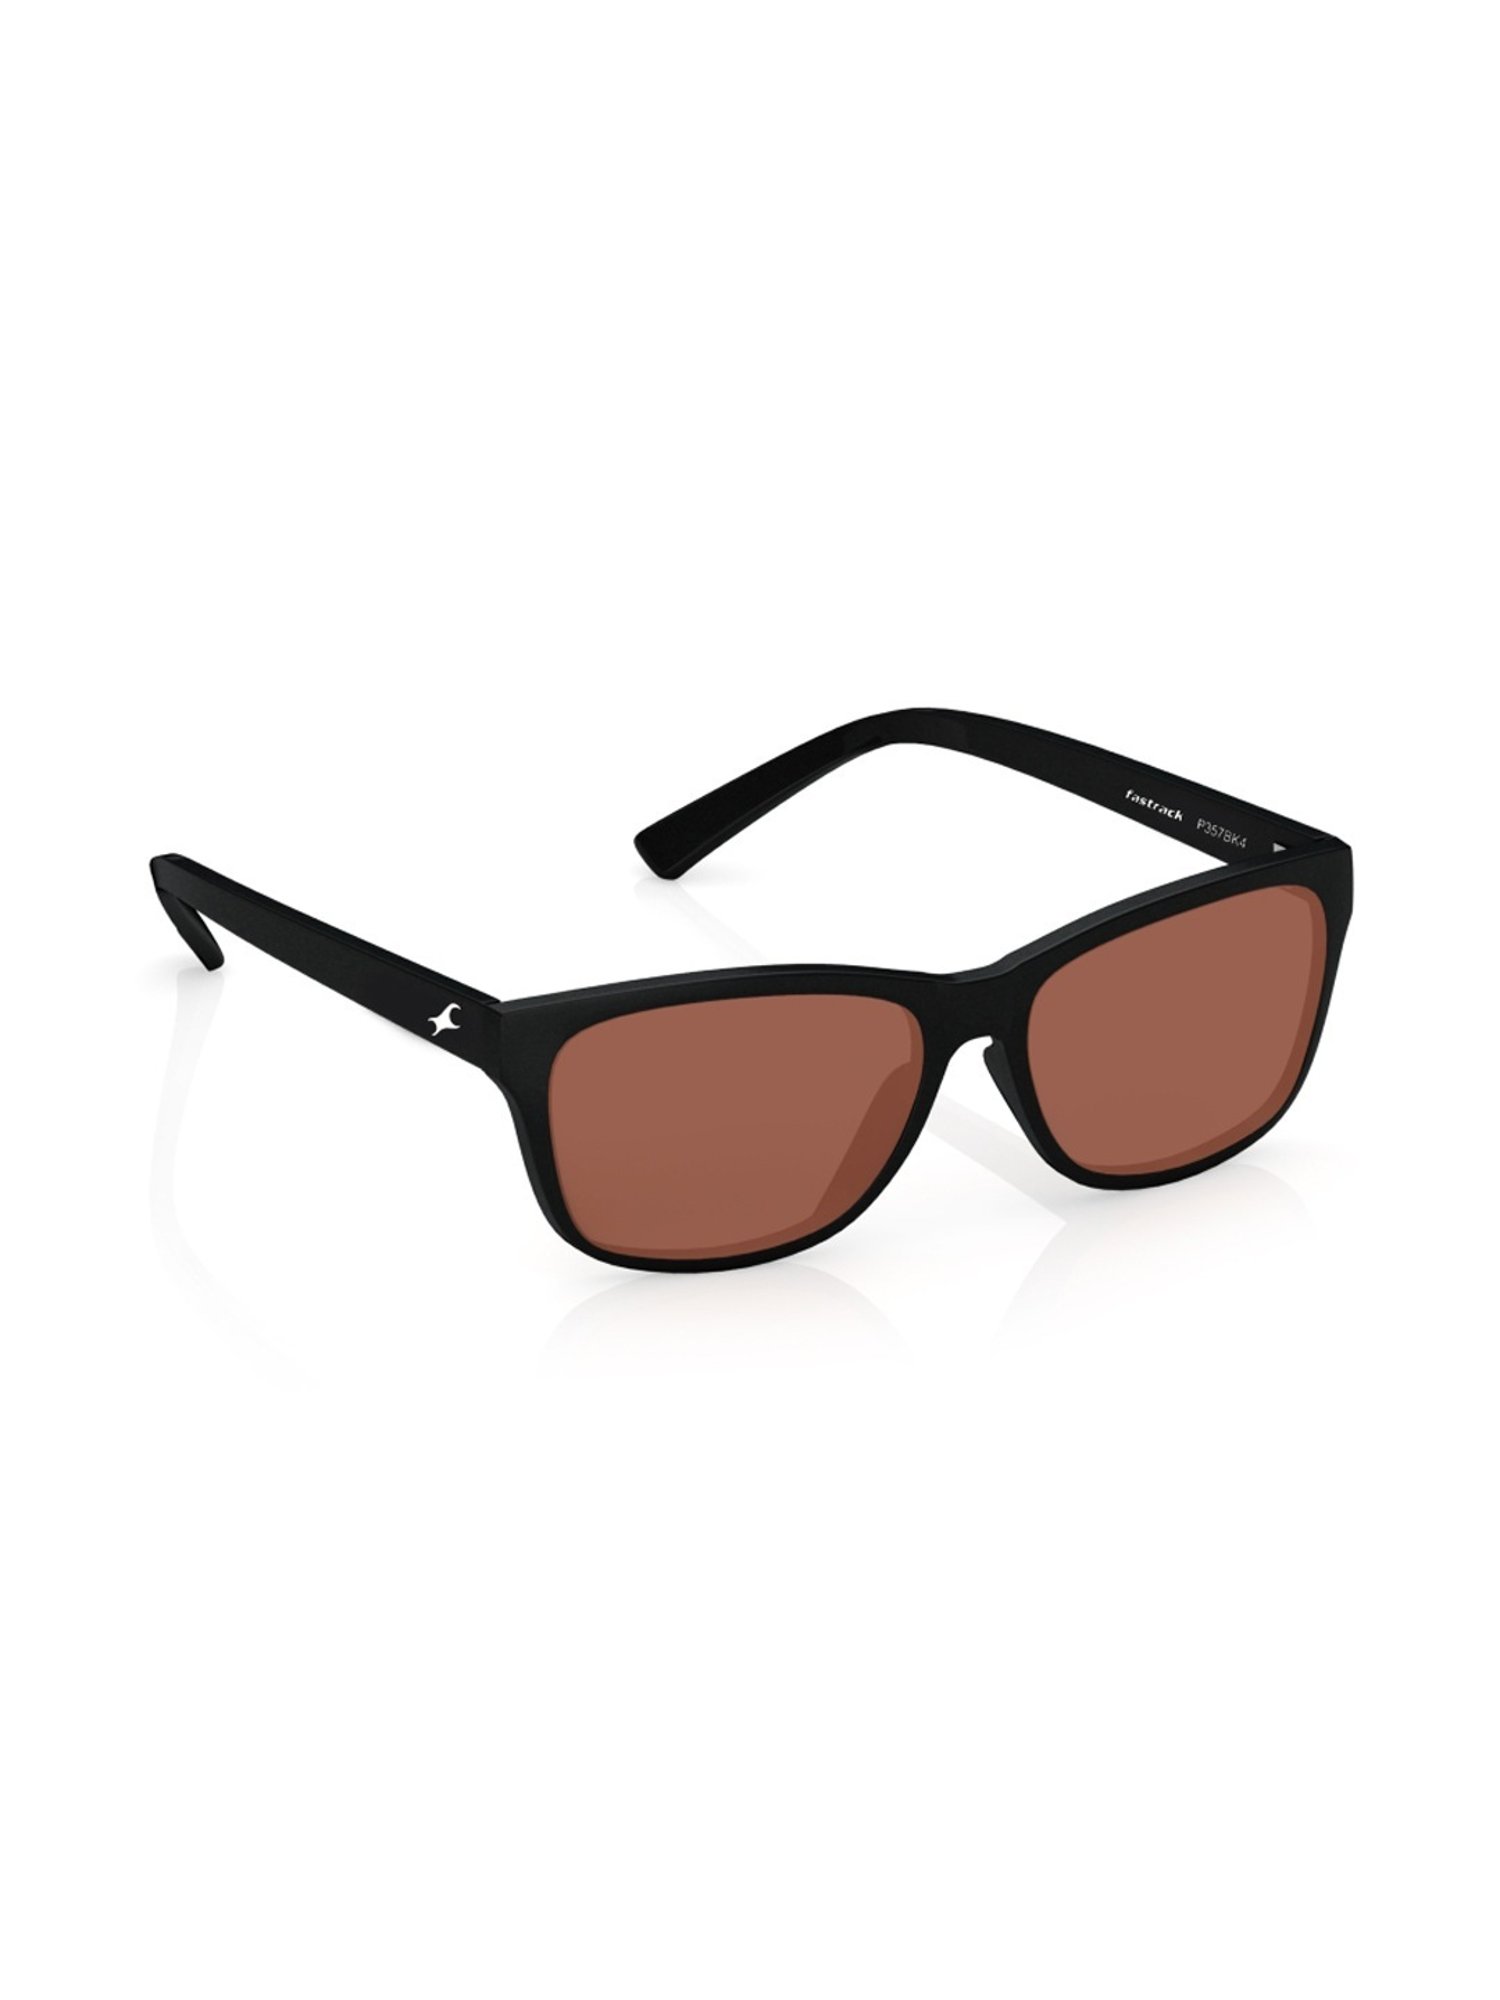 Hobie Cape Polarized Sunglasses - Accessories